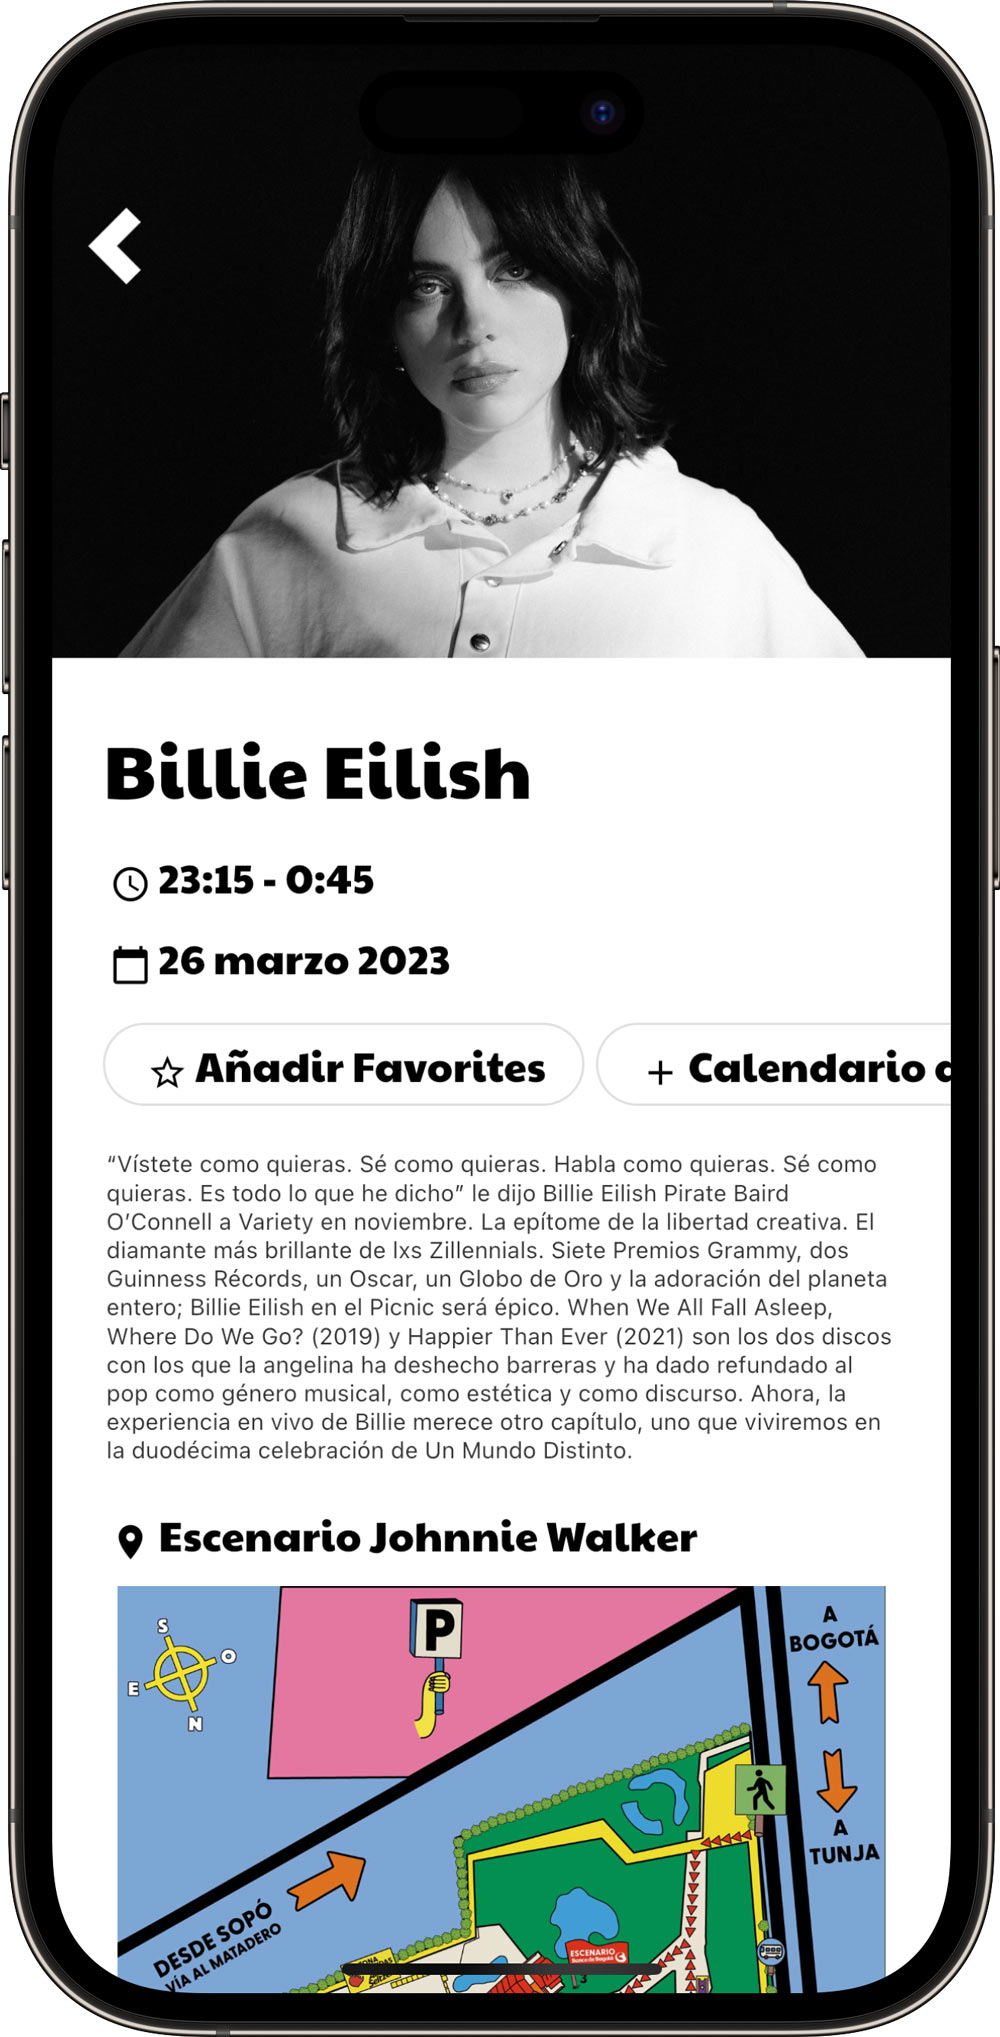 Billie Eilish at the 2023 Festival Estereo de Picnic